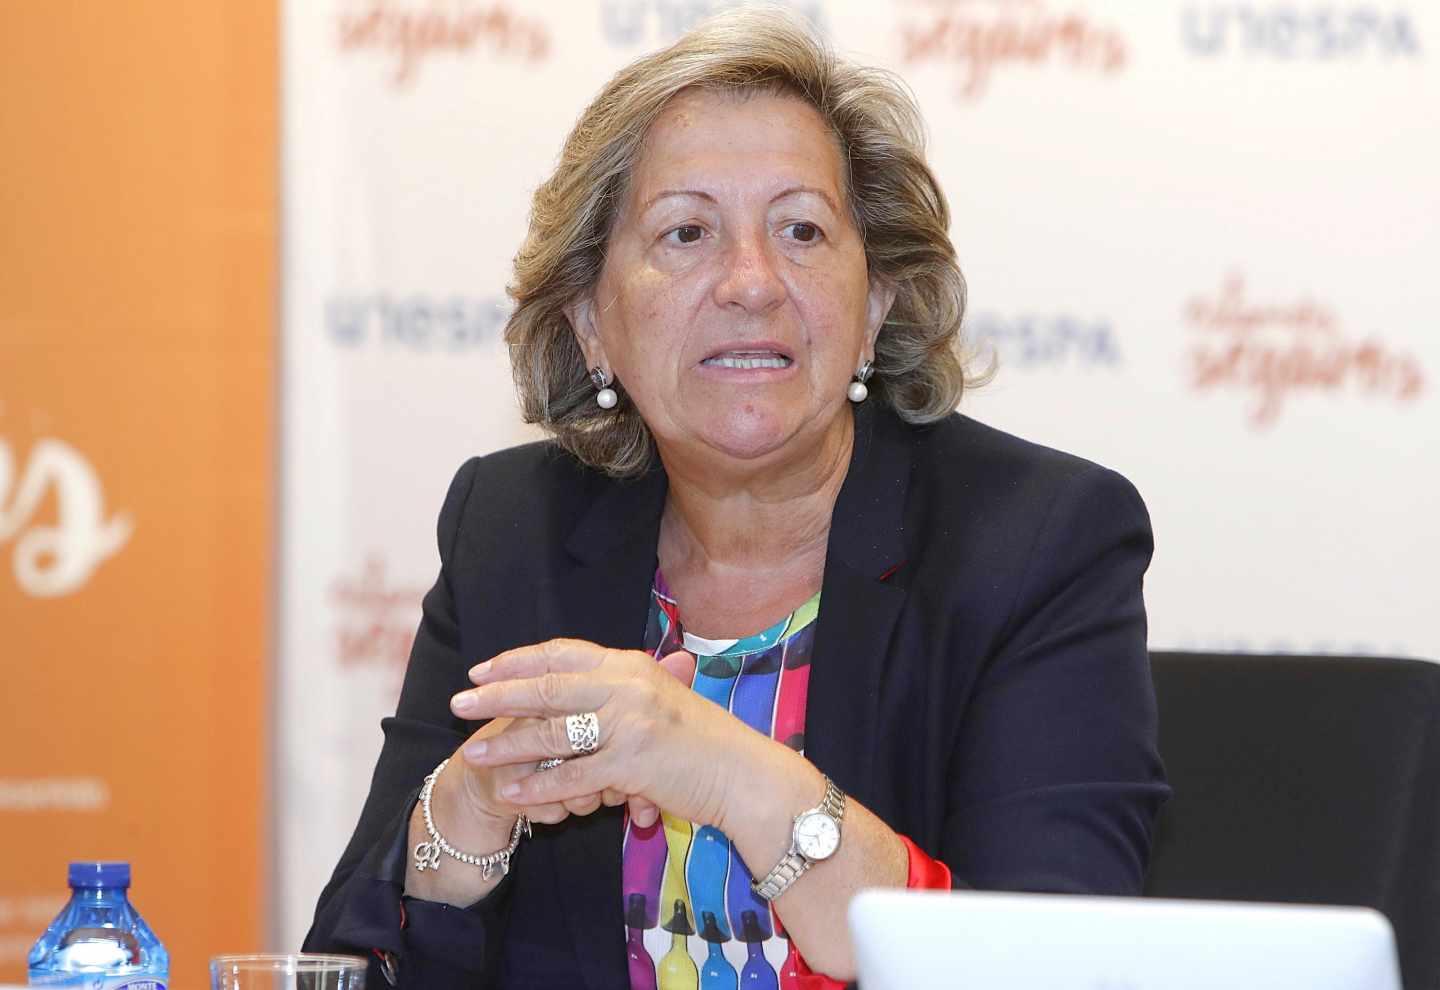 La presidenta de Unespa, Pilar González de Frutos.